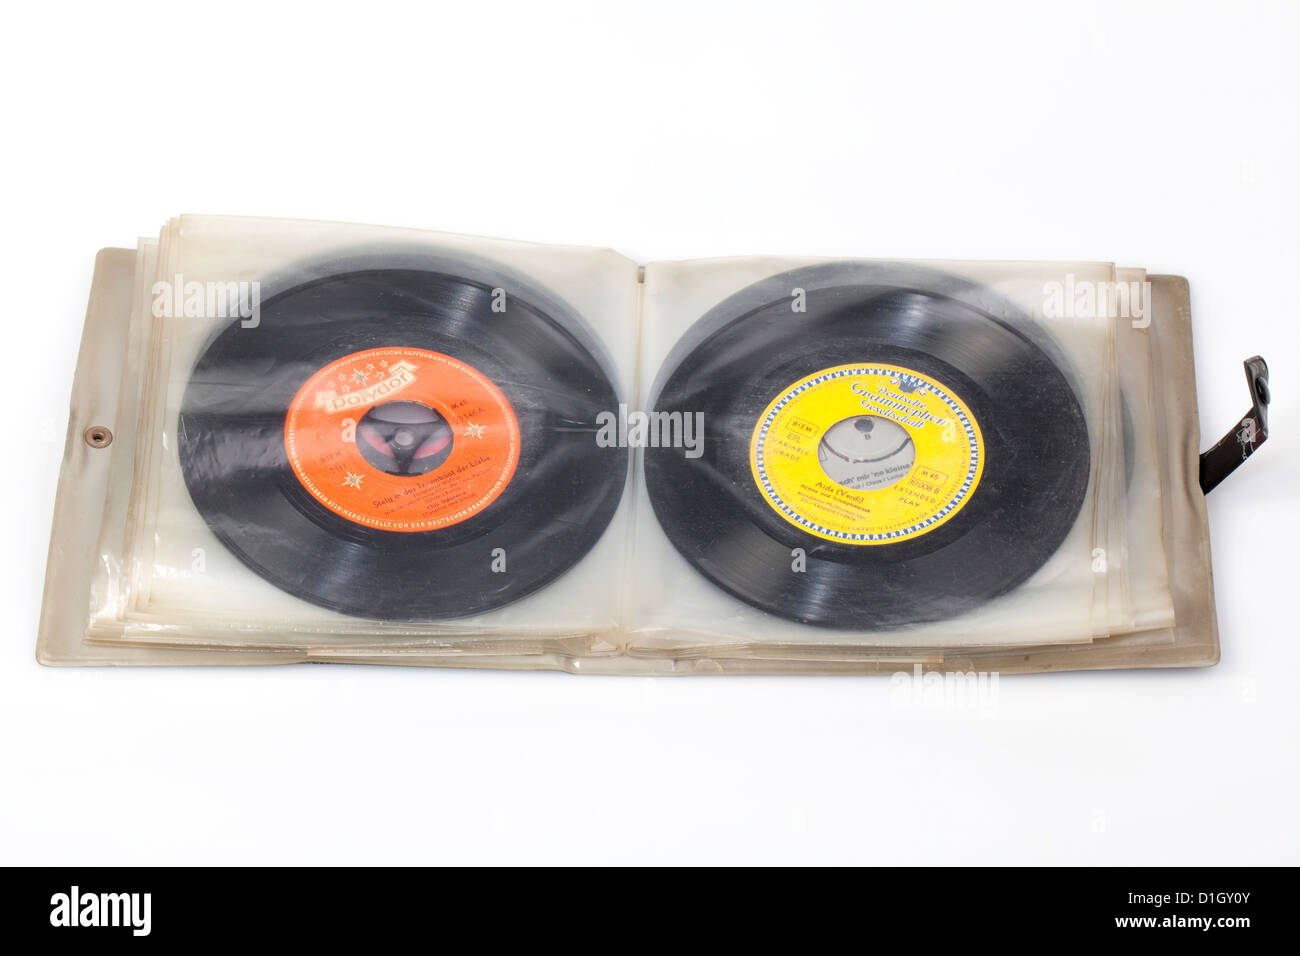 Old vinyl singles Stock Photo